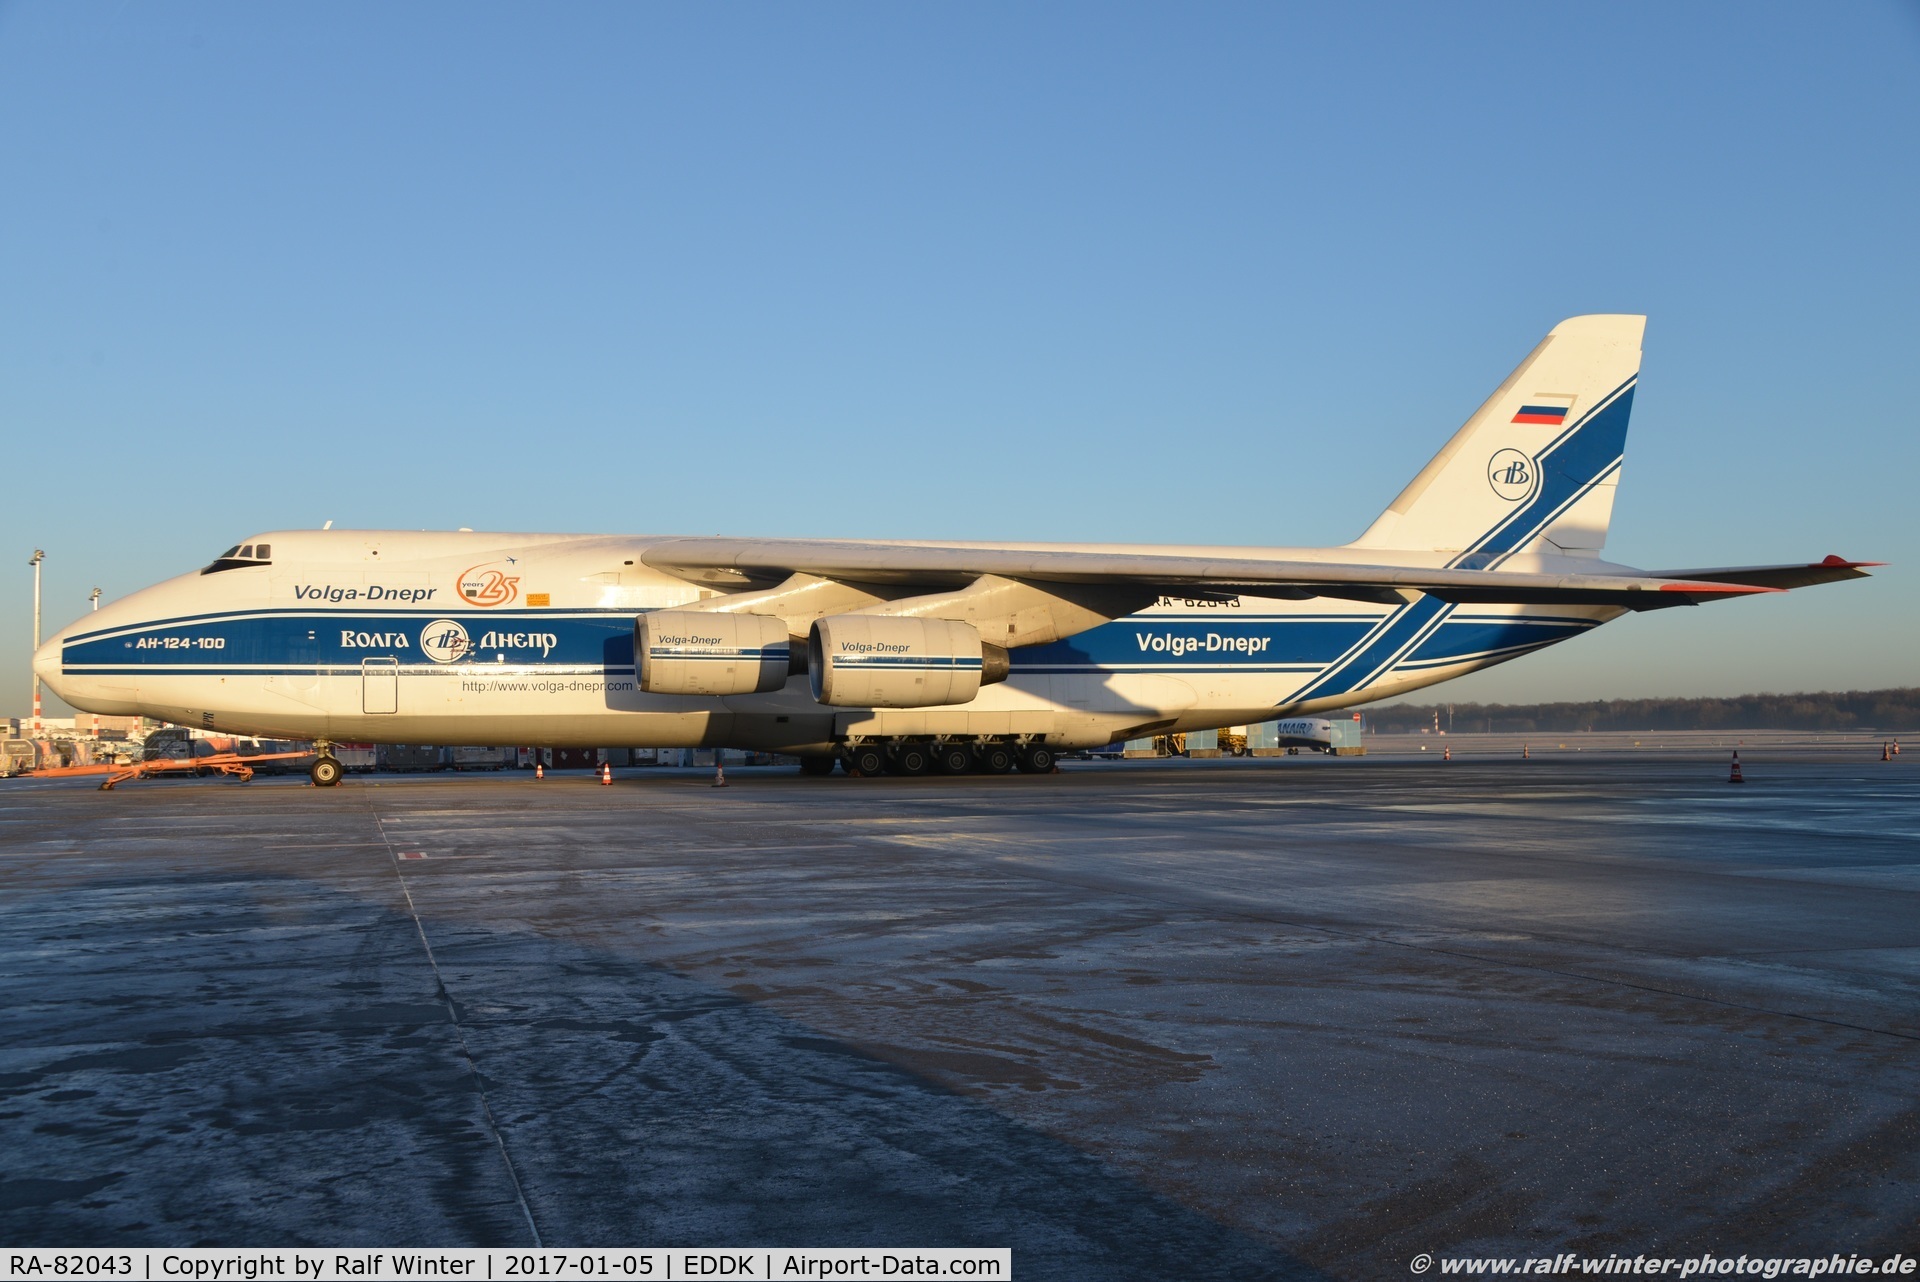 RA-82043, 1990 Antonov An-124-100 Ruslan C/N 9773054155101/0607, Antonov An 124-100 - Volga-Dnepr - RA-82043 05.01.2017 - CGN - Positiom F21